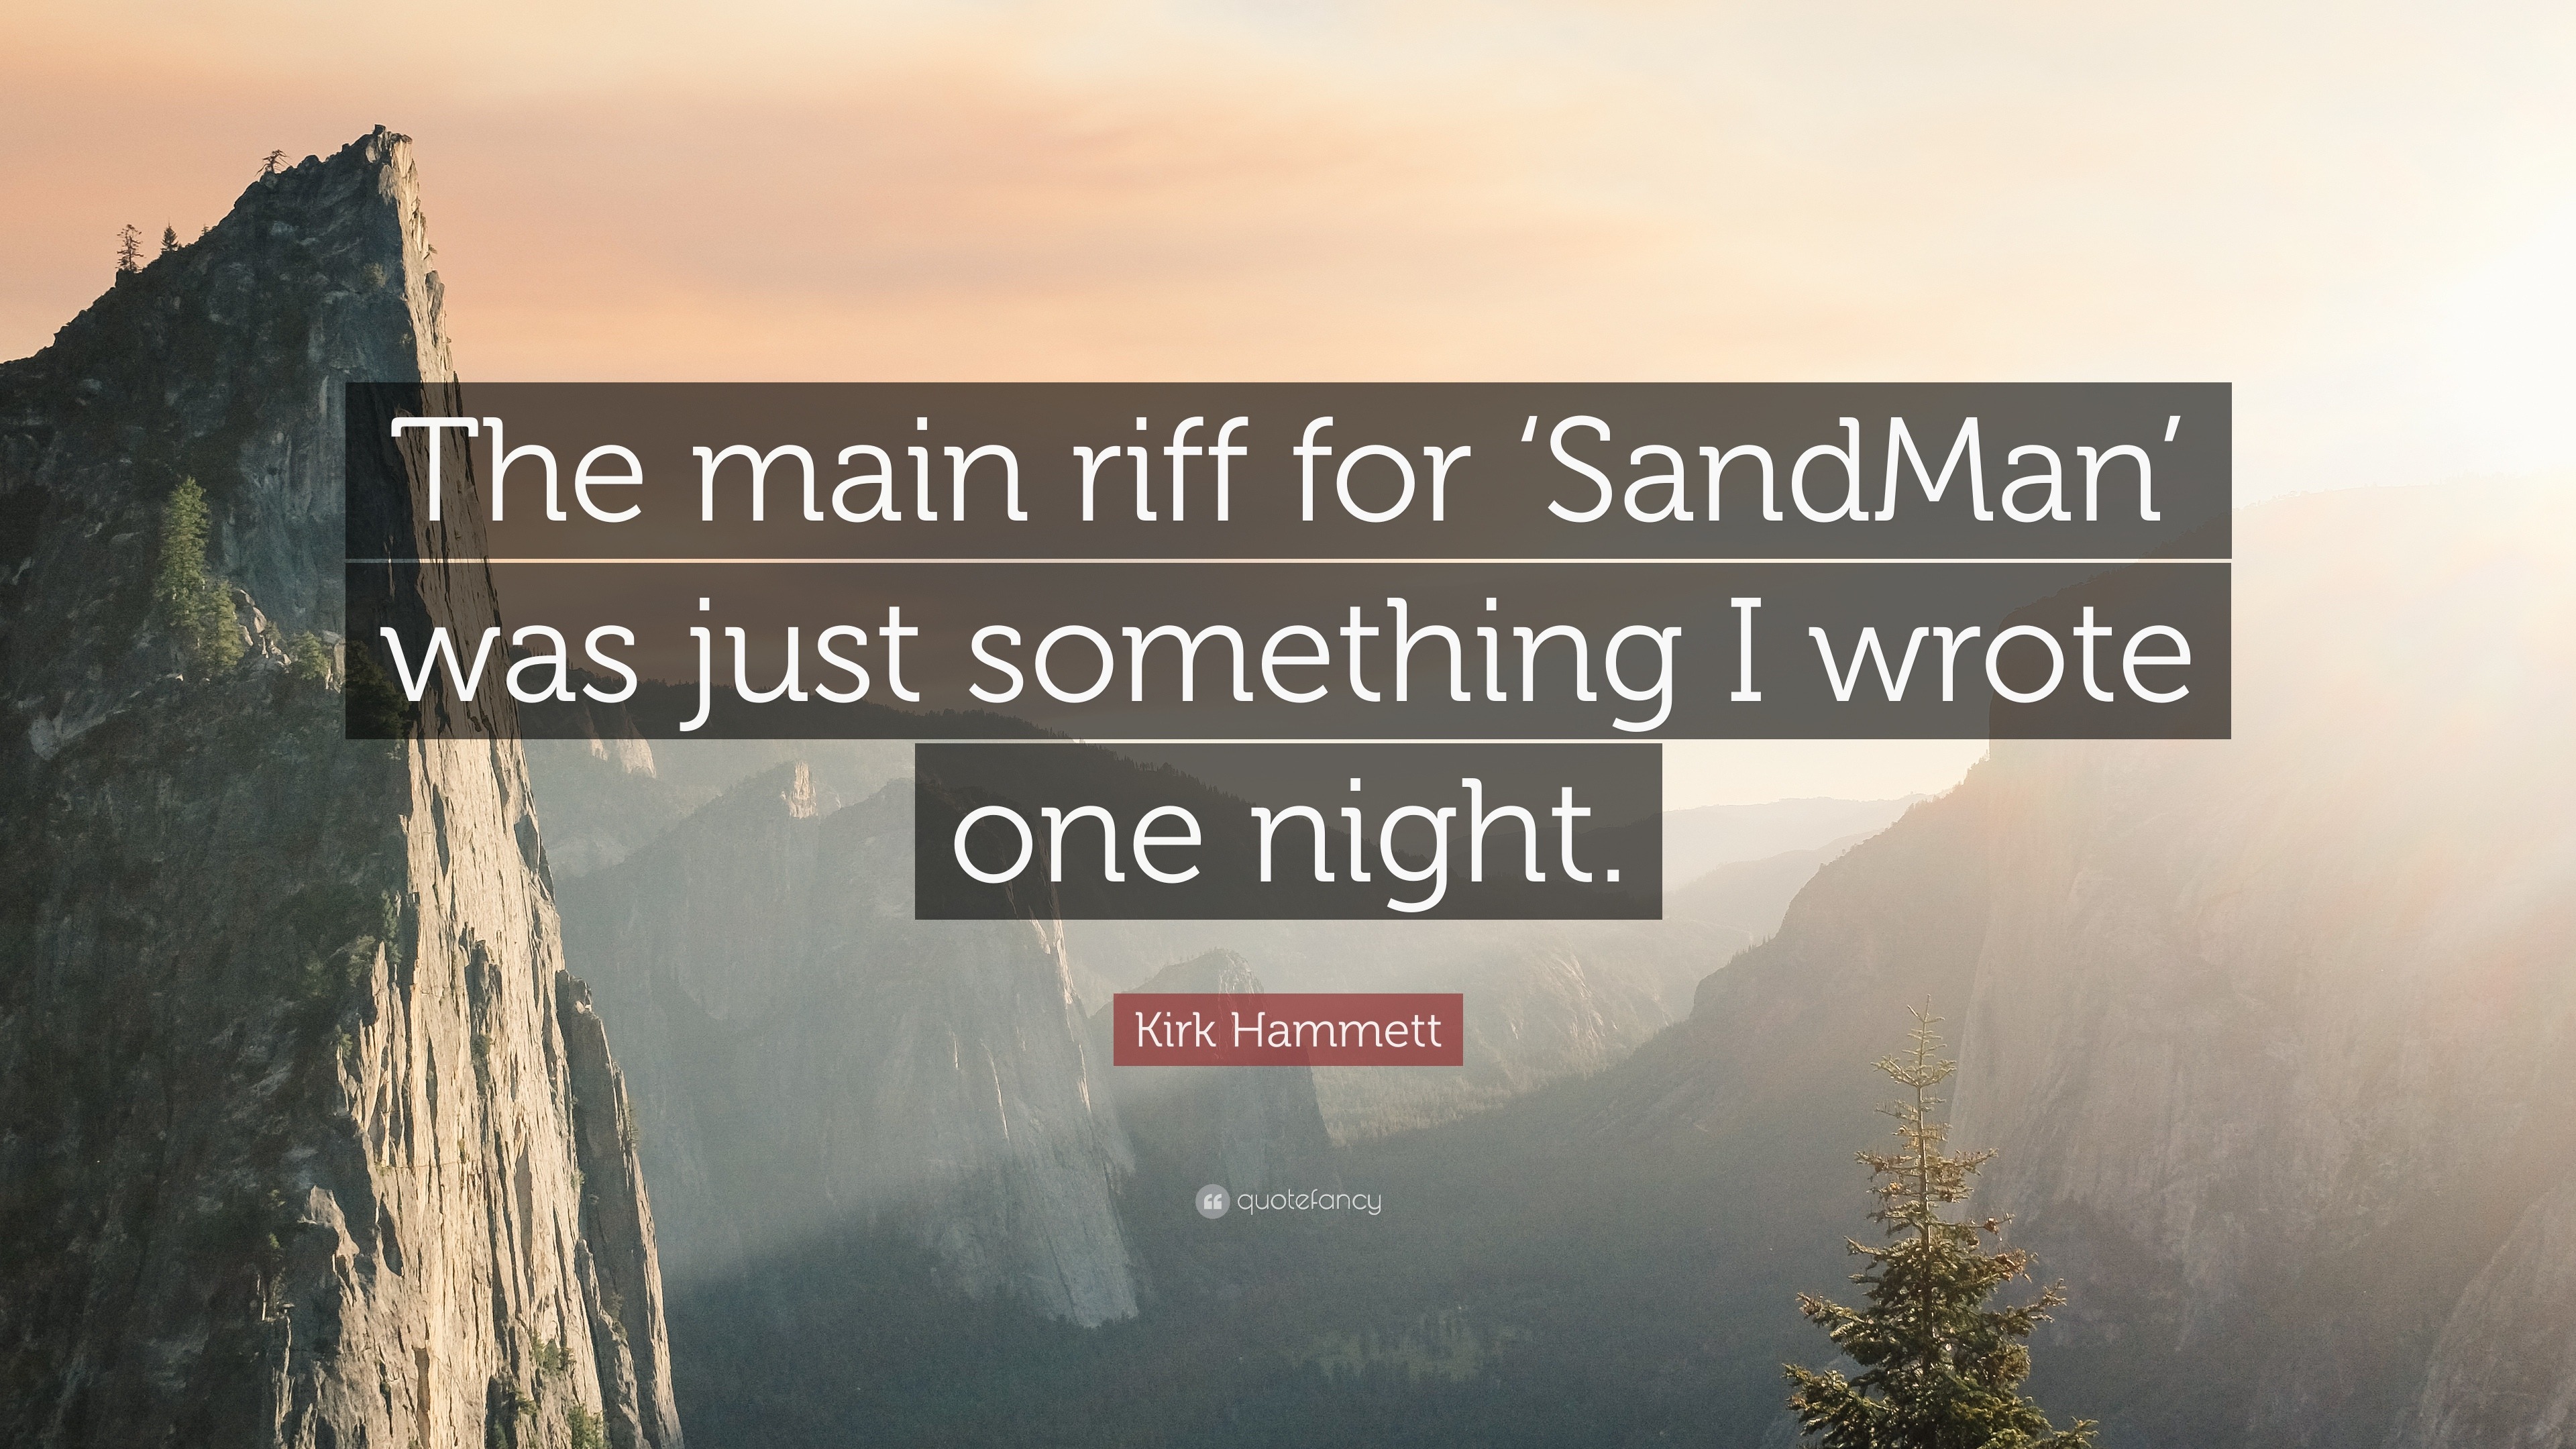 Sandman Quote : Top 9 Neil Gaiman Sandman Death Quotes Sayings / Sandman quotations to activate ...